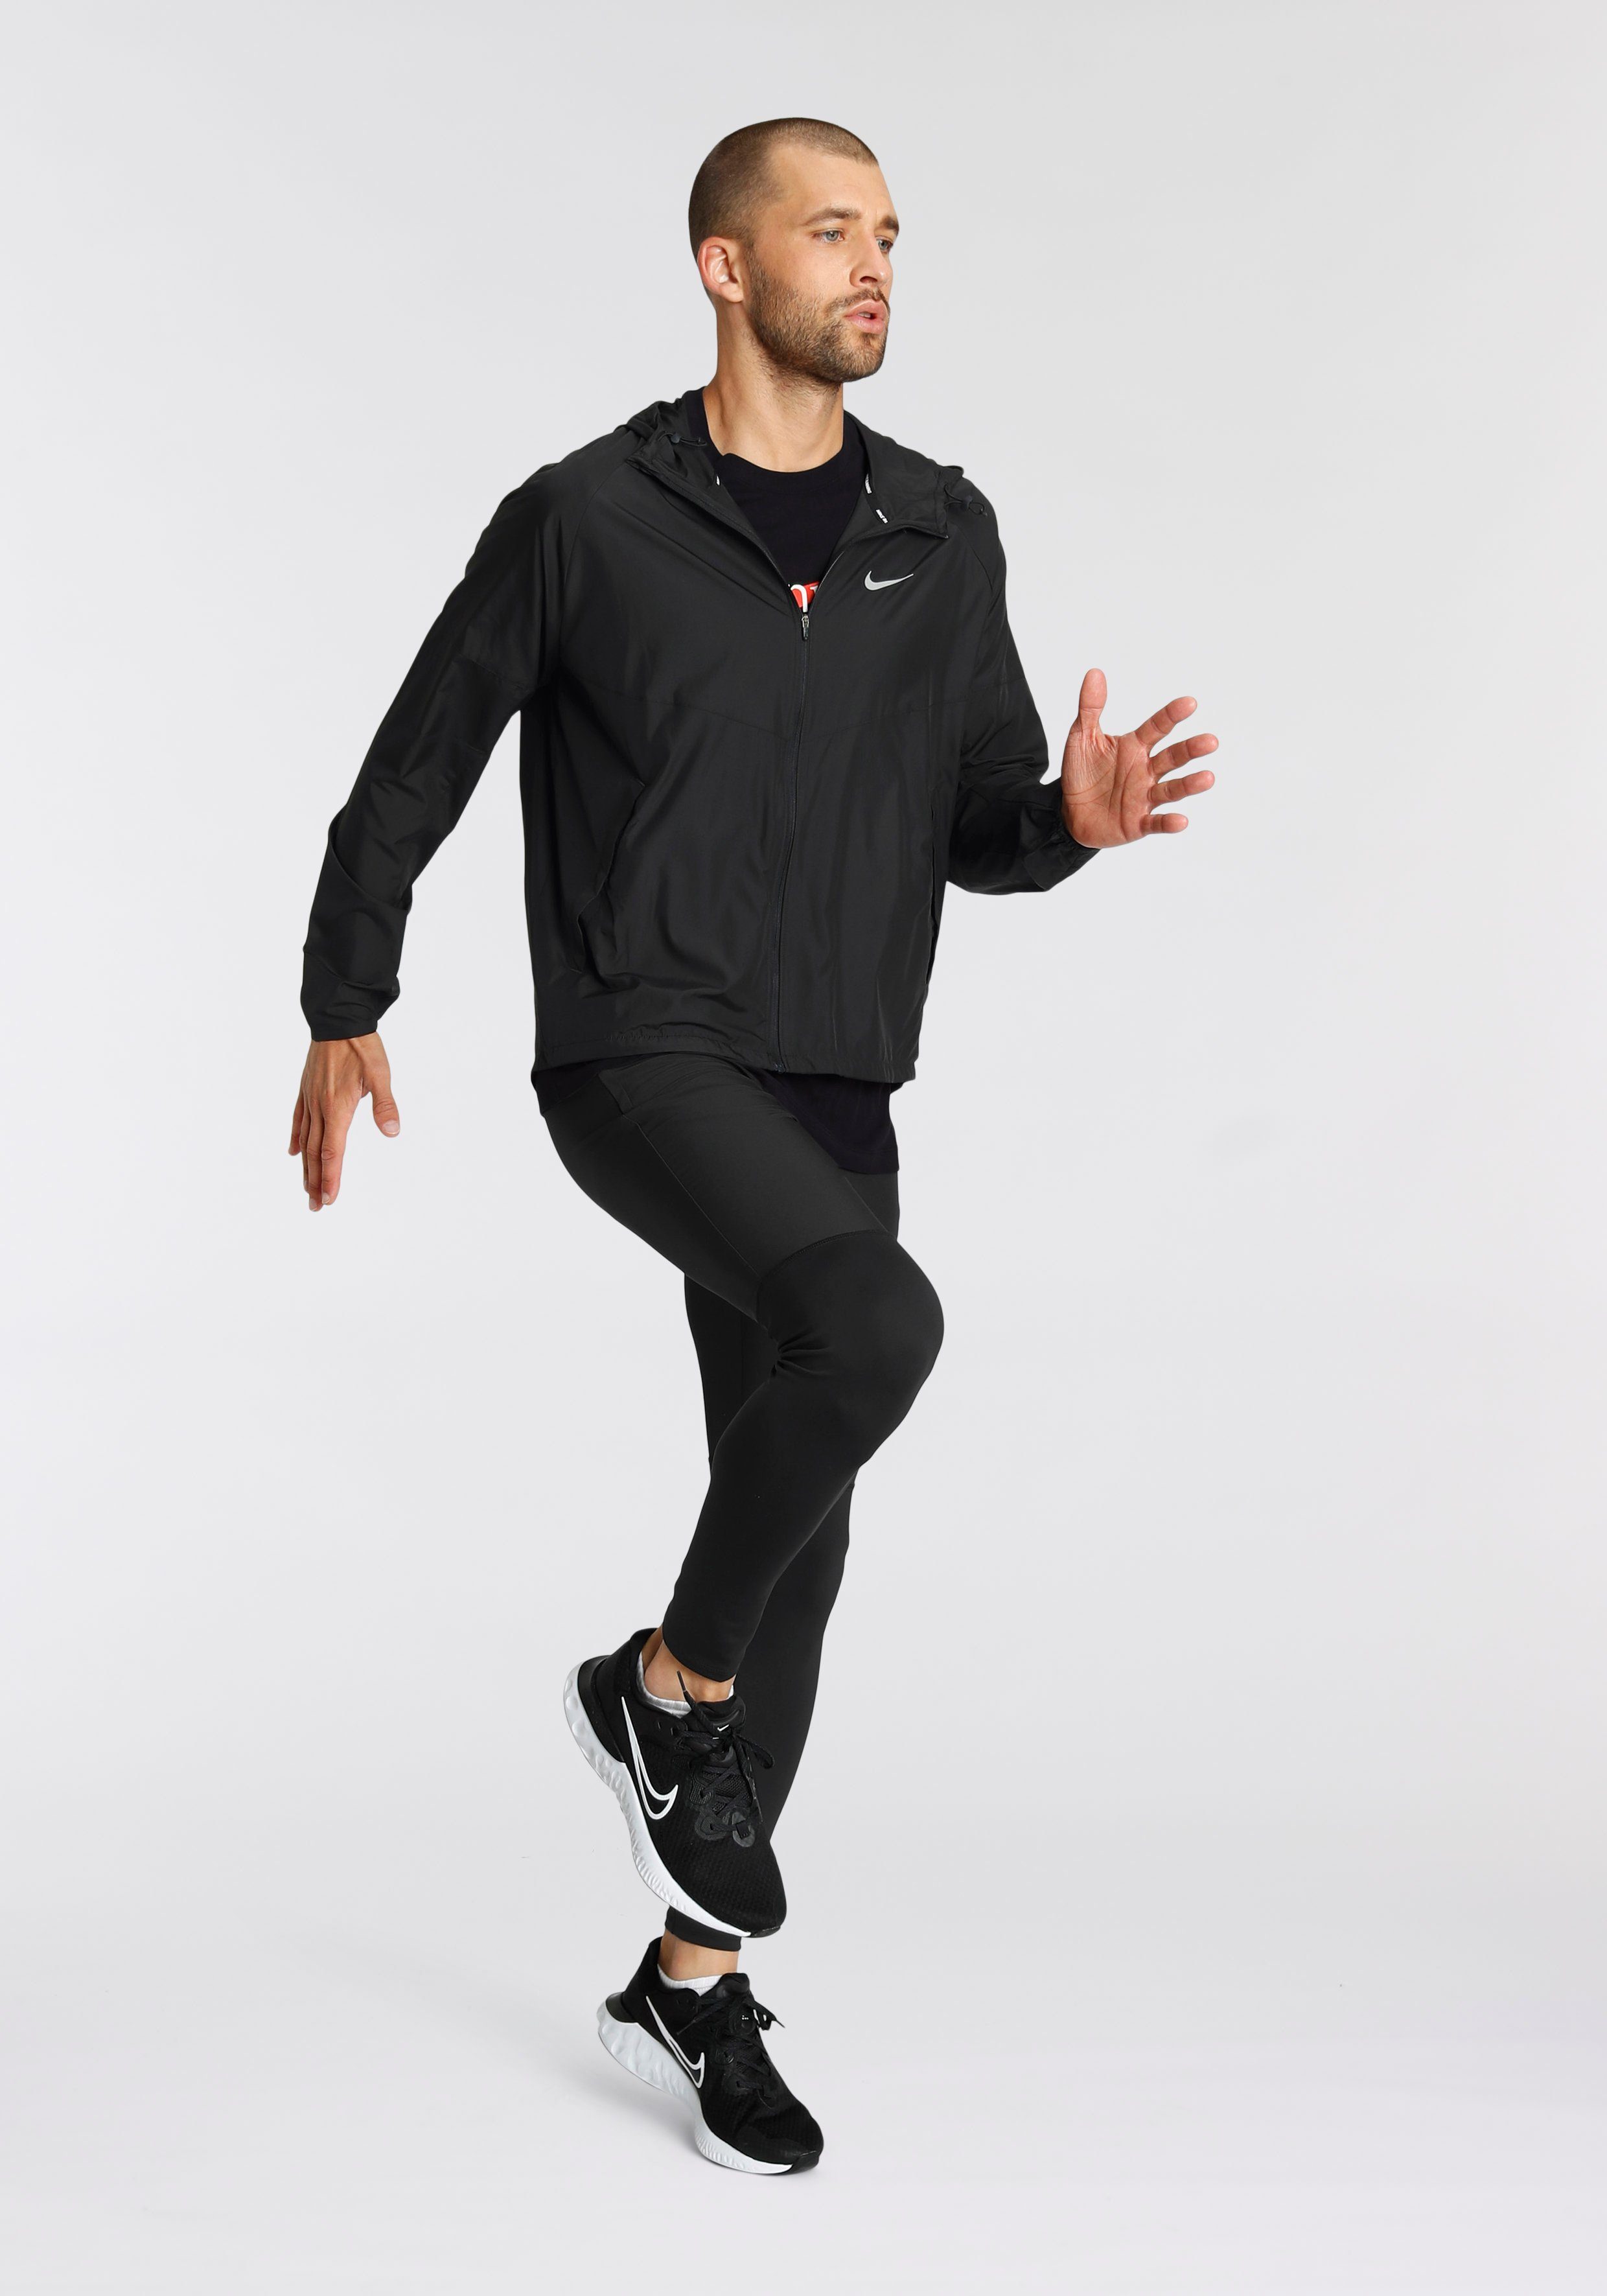 Men's Laufjacke Running Jacket schwarz Miler Repel Nike